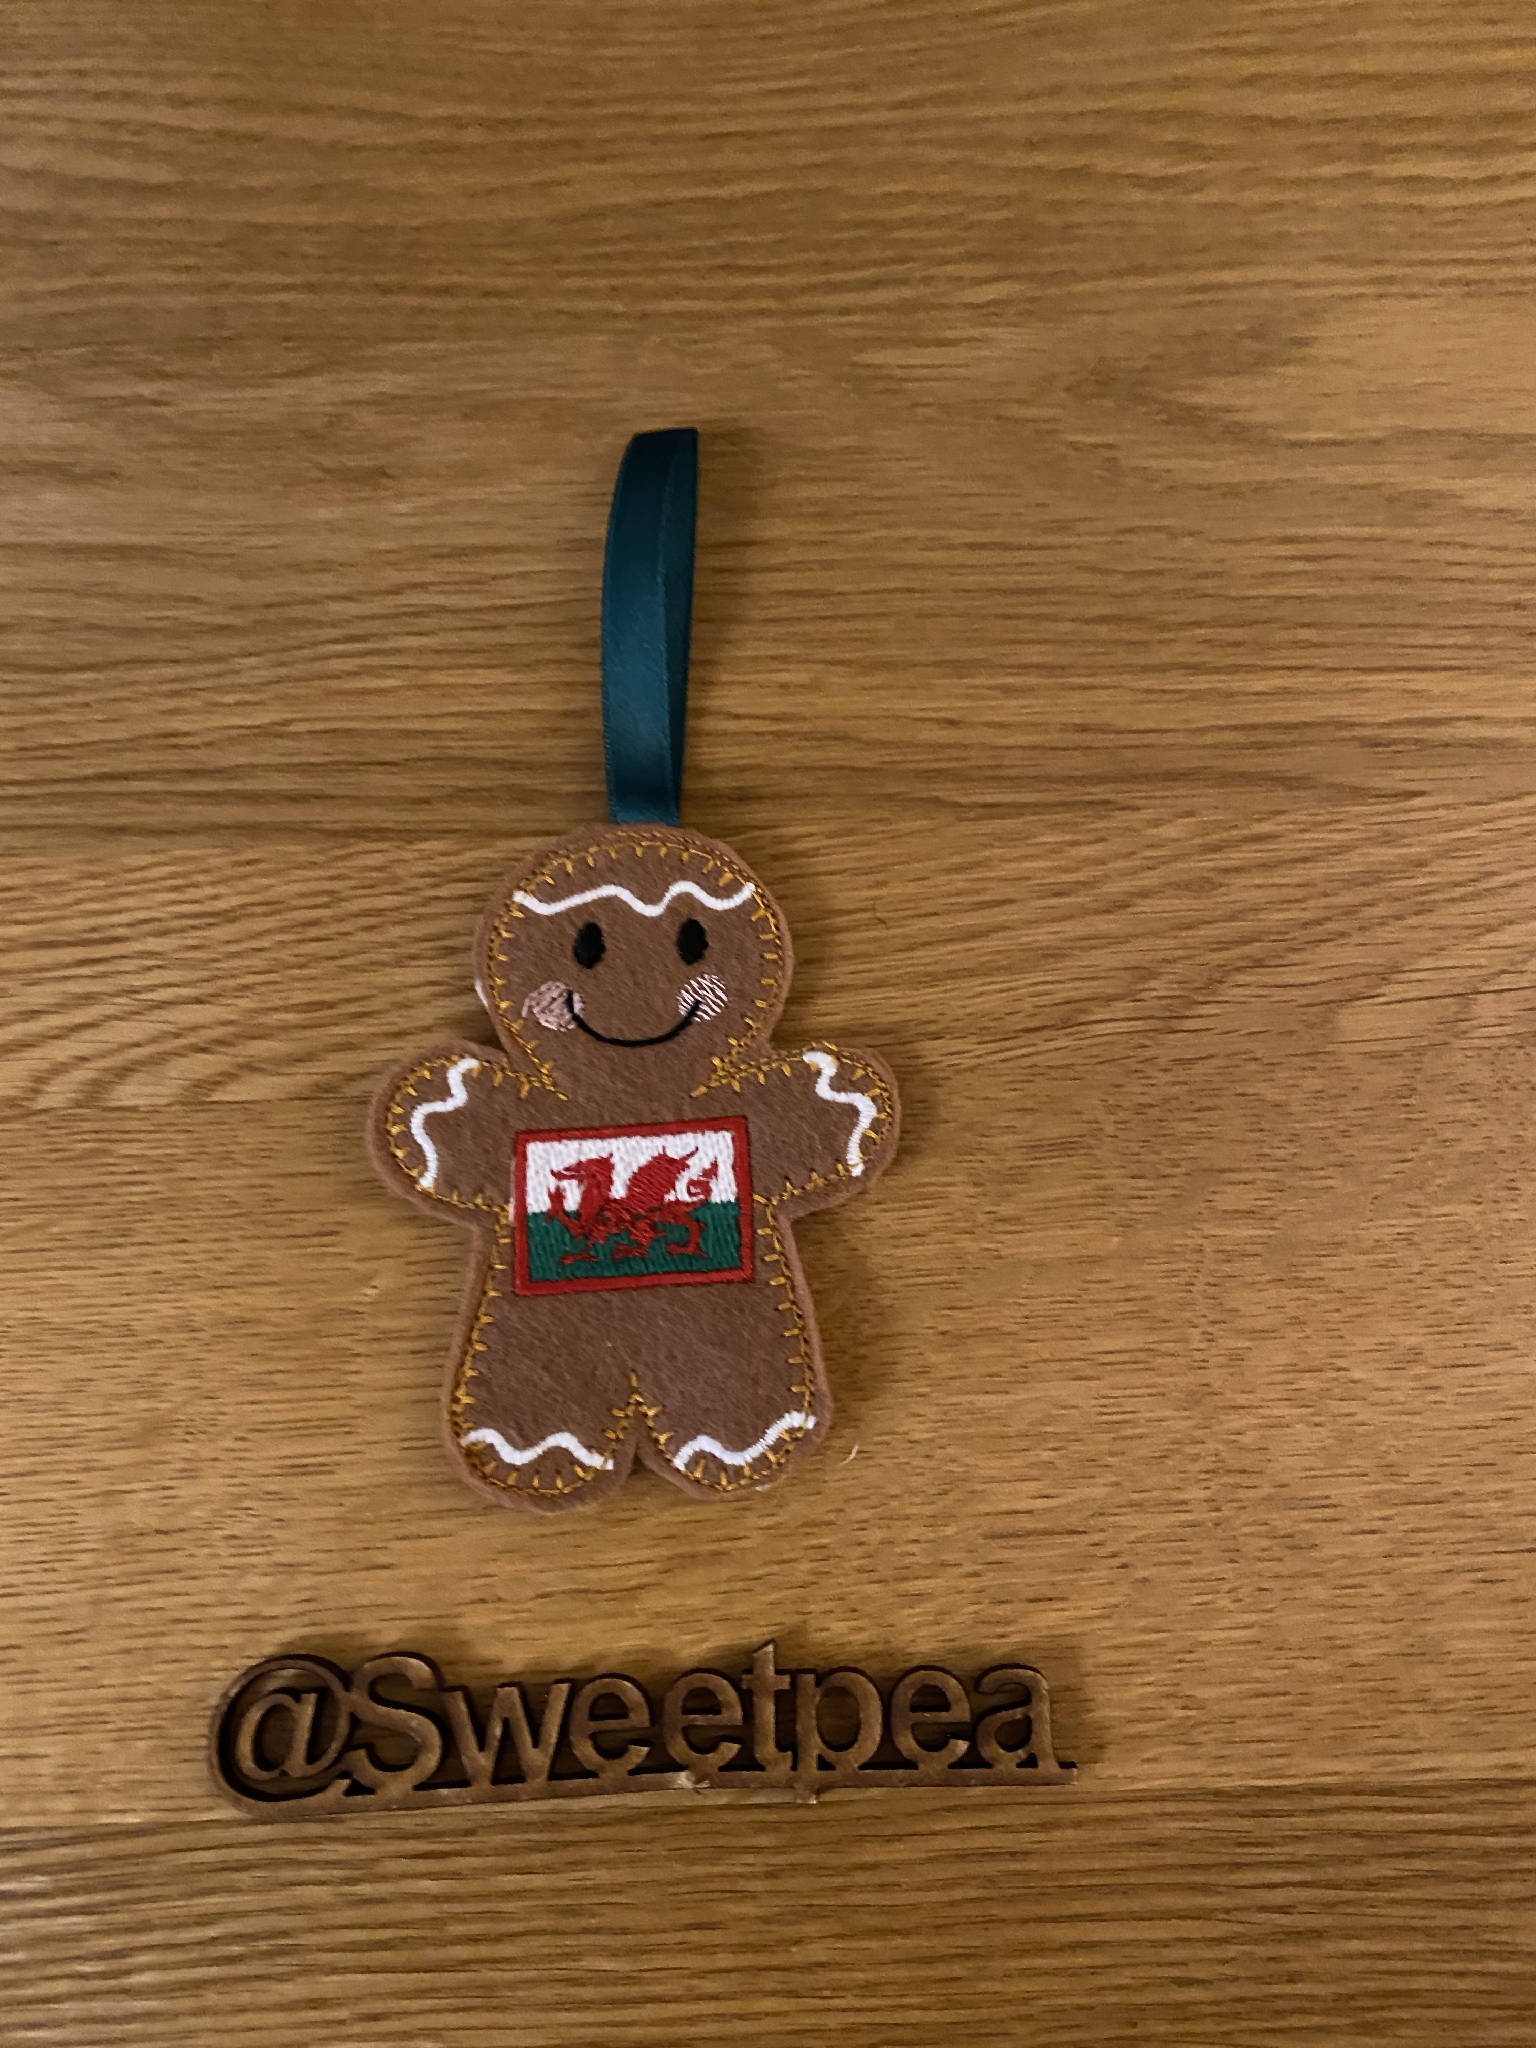 Sweetpea Gingerbread - Welsh Flag Ginger